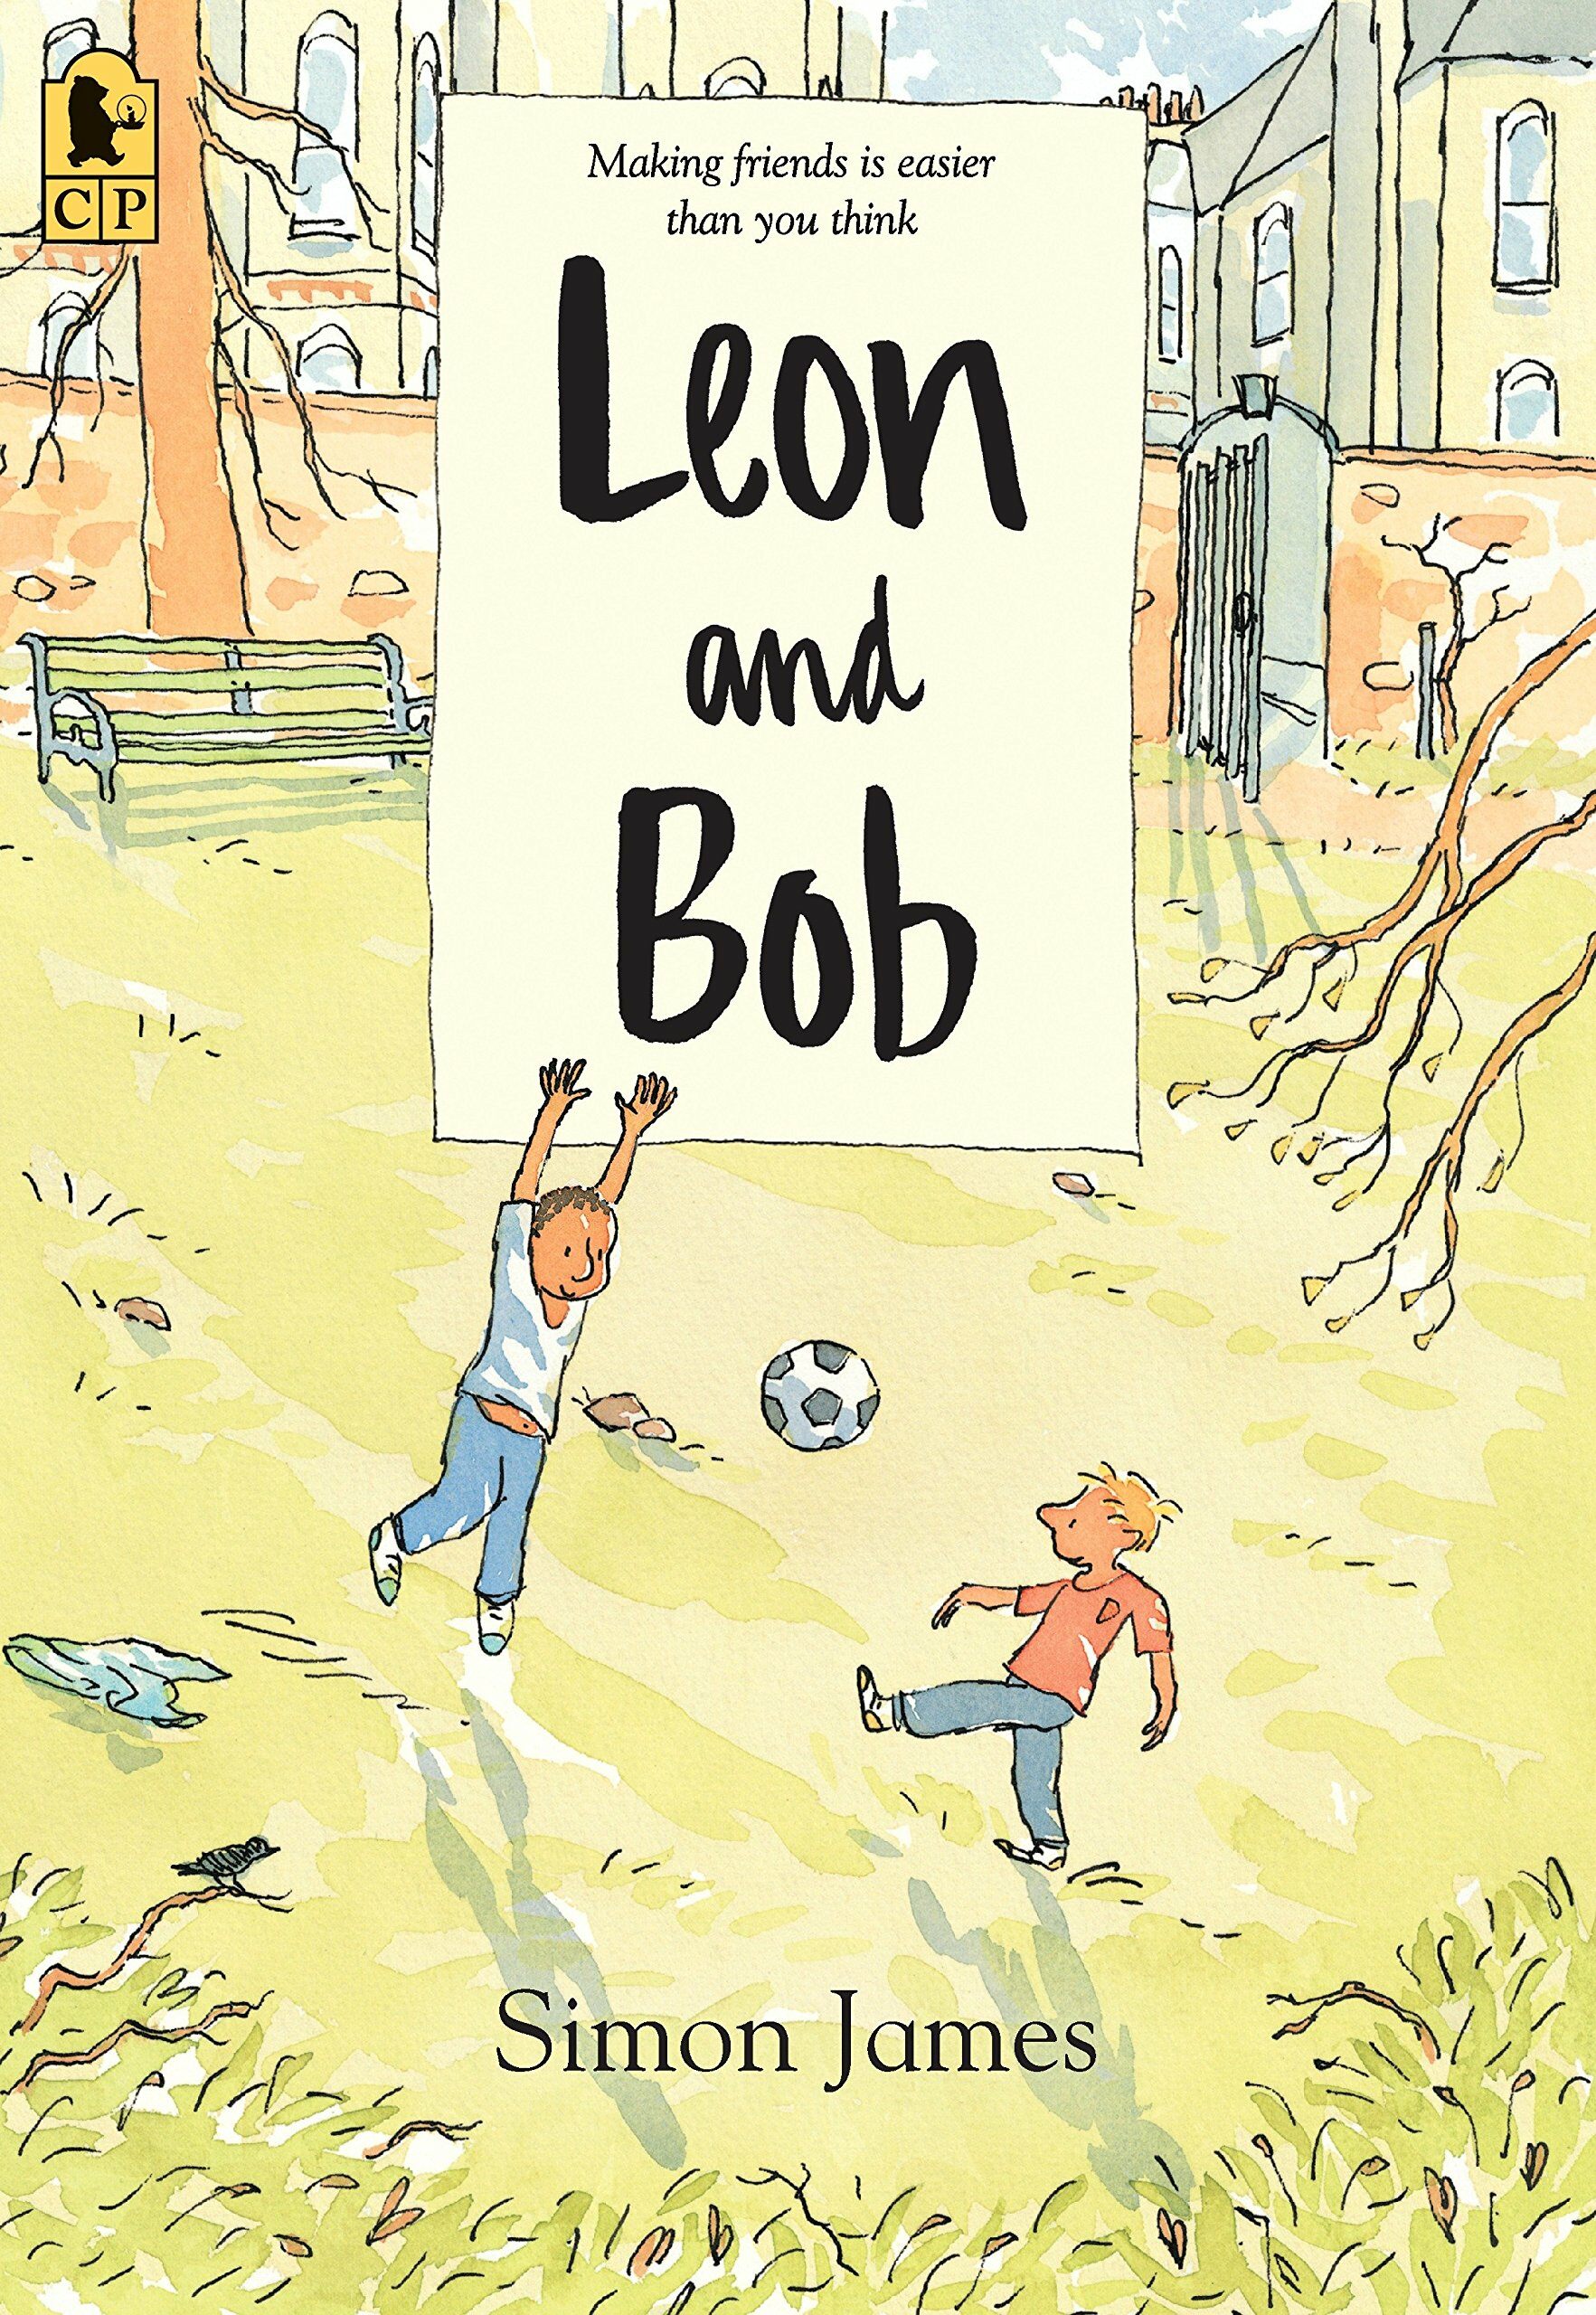 Leon and Bob (Paperback)